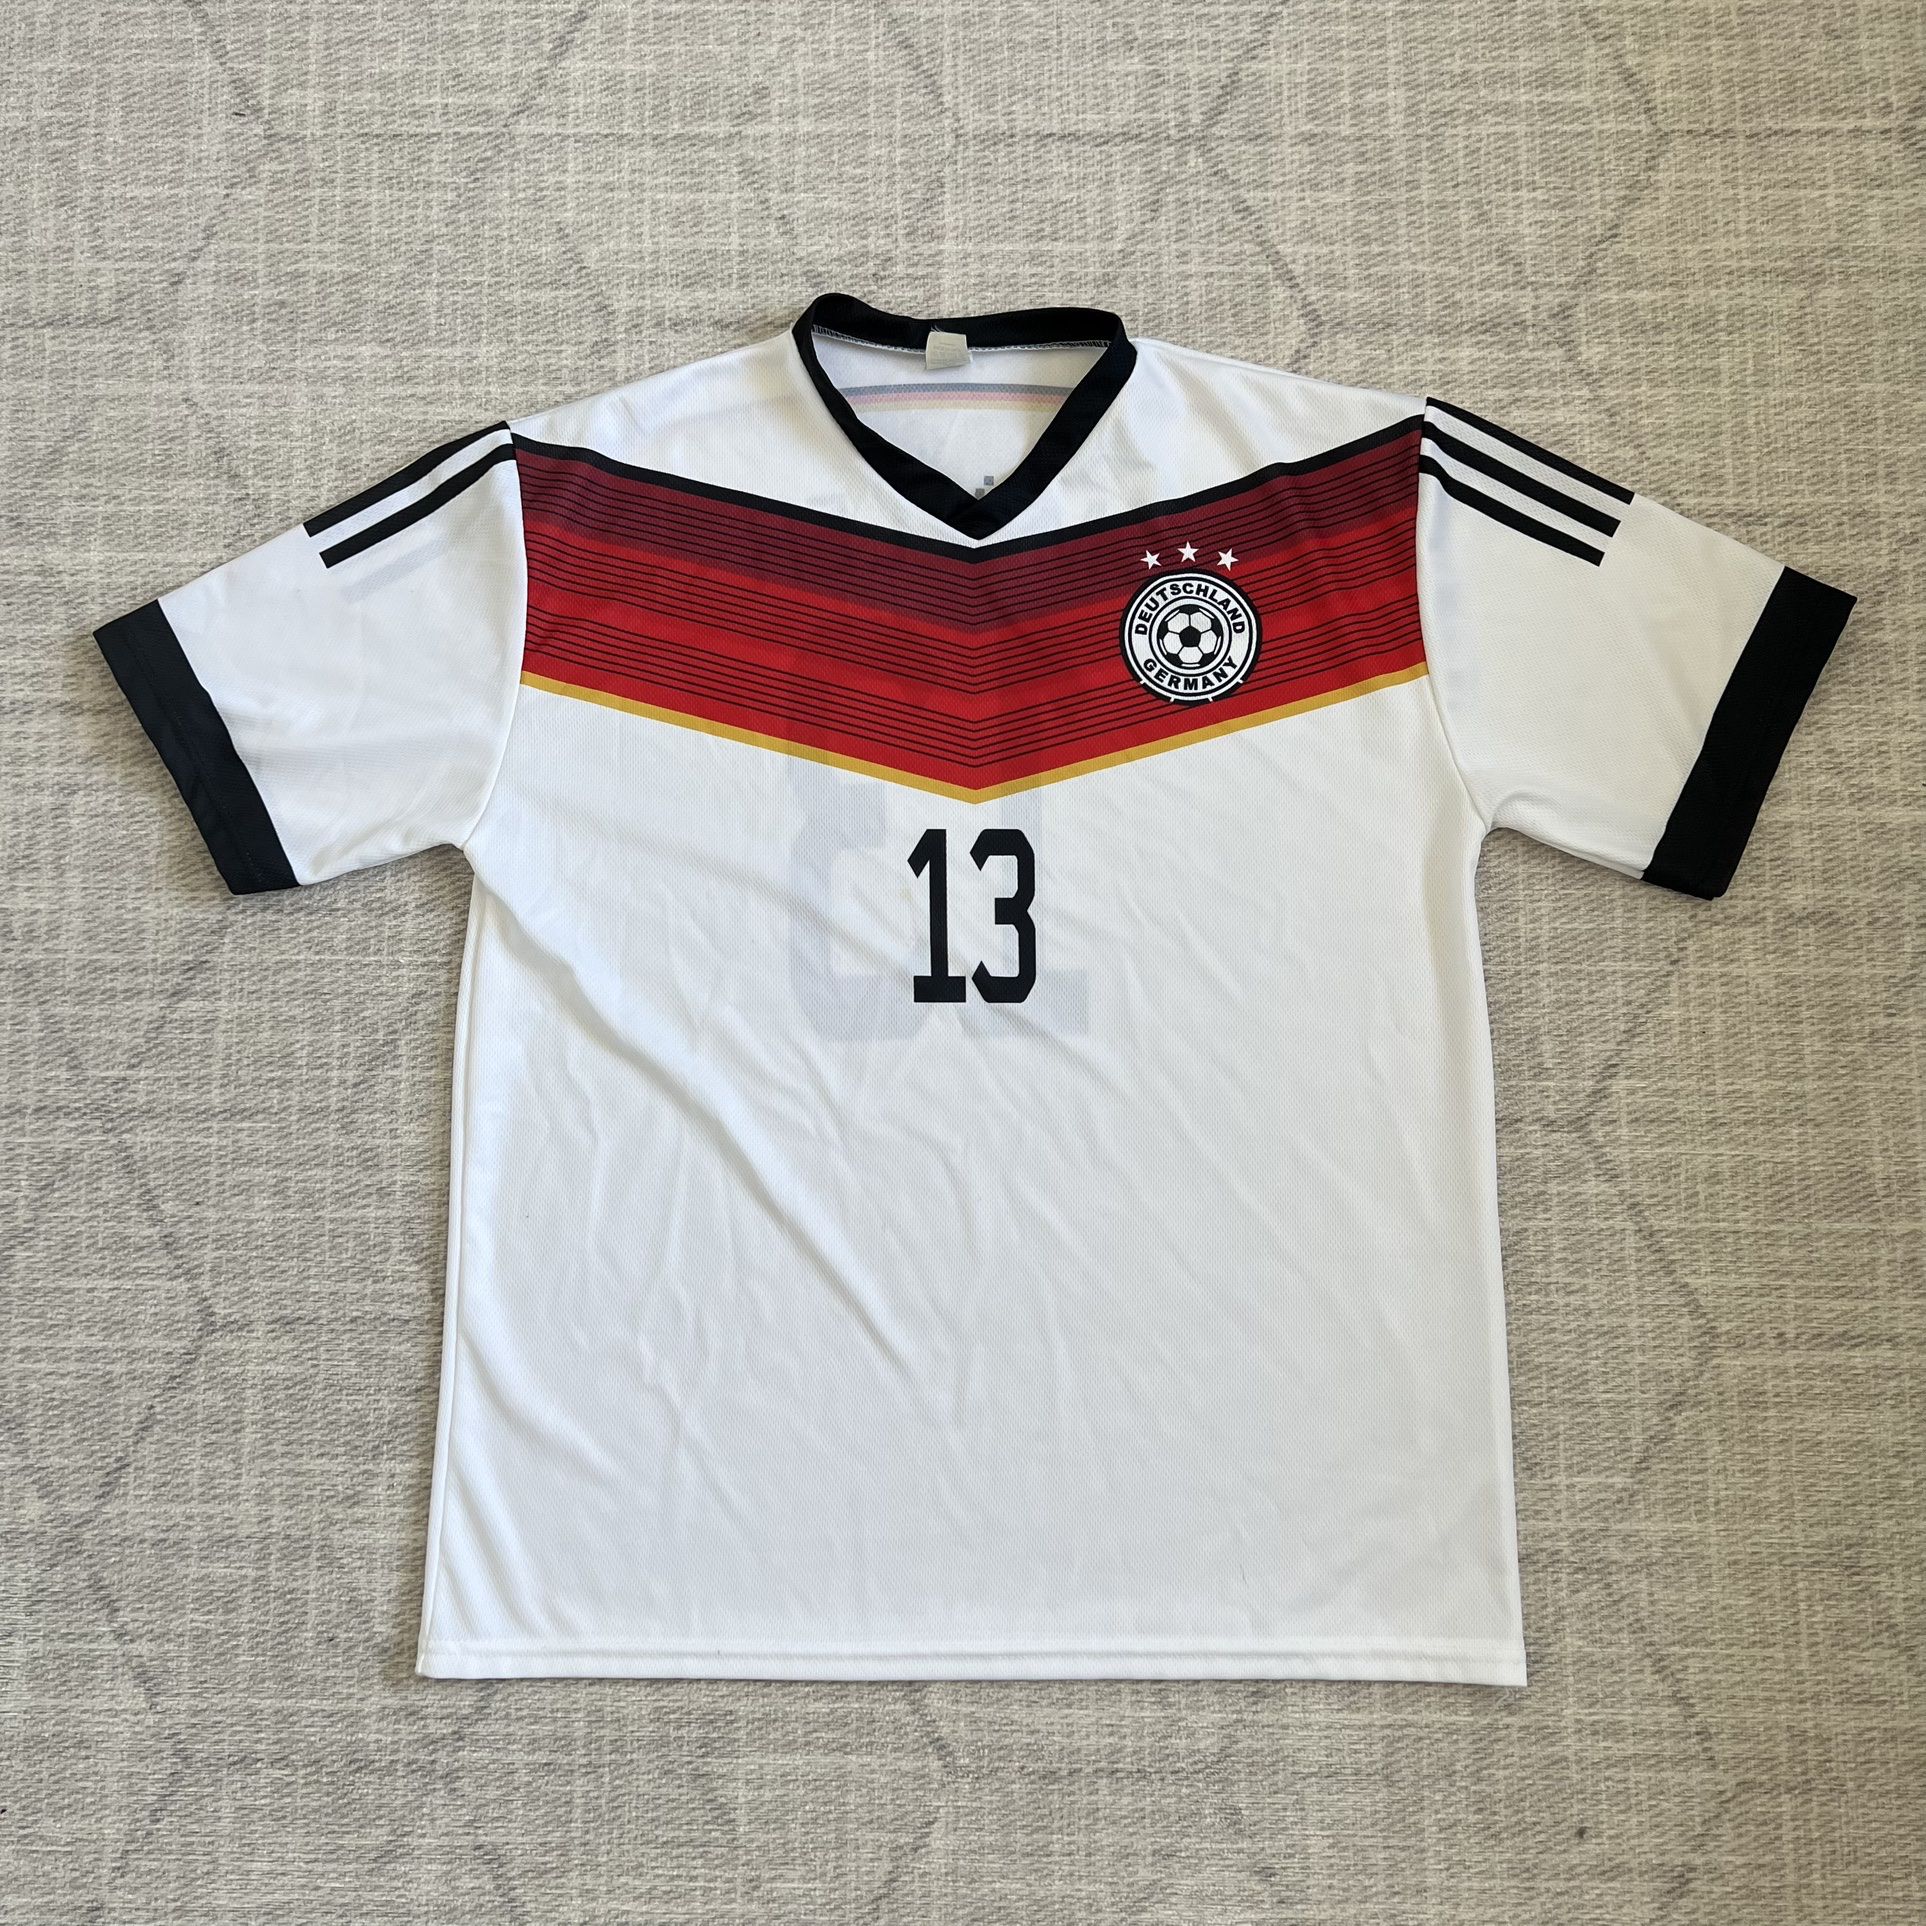 Jual Jersey Jerman / Germany 2014 - Original - Final World Cup